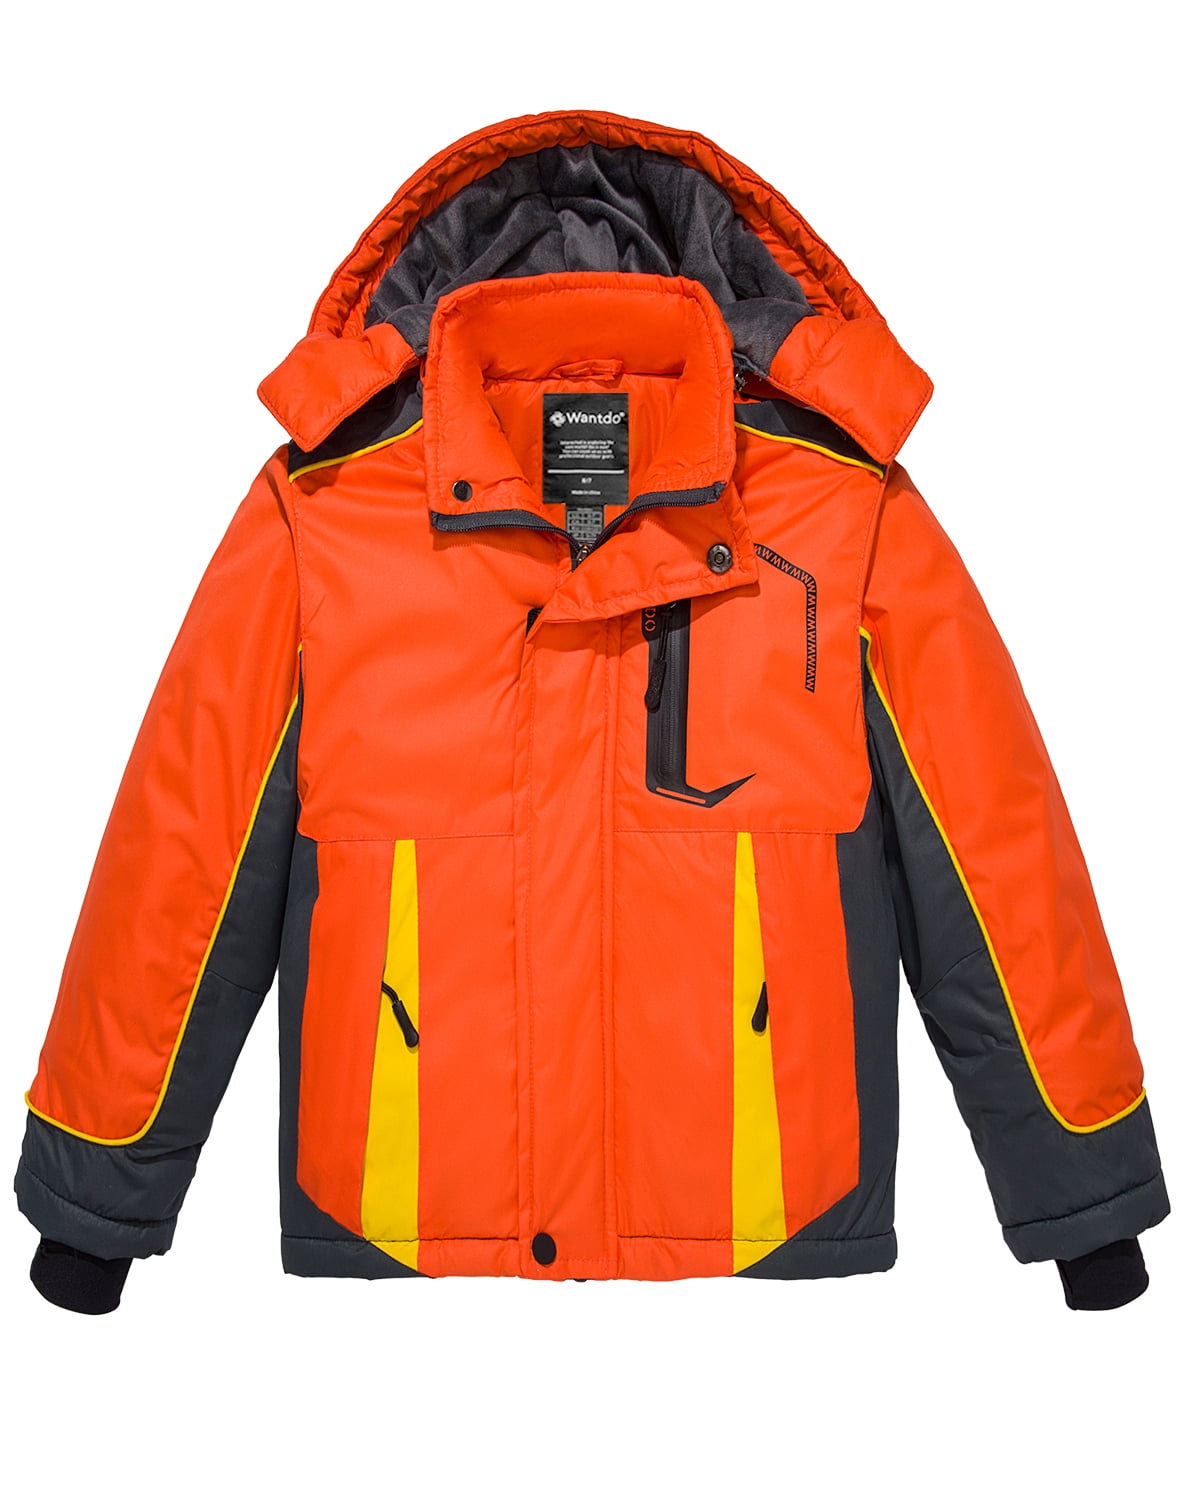 Boy's Waterproof Ski Jacket,Kids Outdoor Snowboarding Windproof Jacket,Fleece Lined Hooded,Warm Winter Snow Coat 